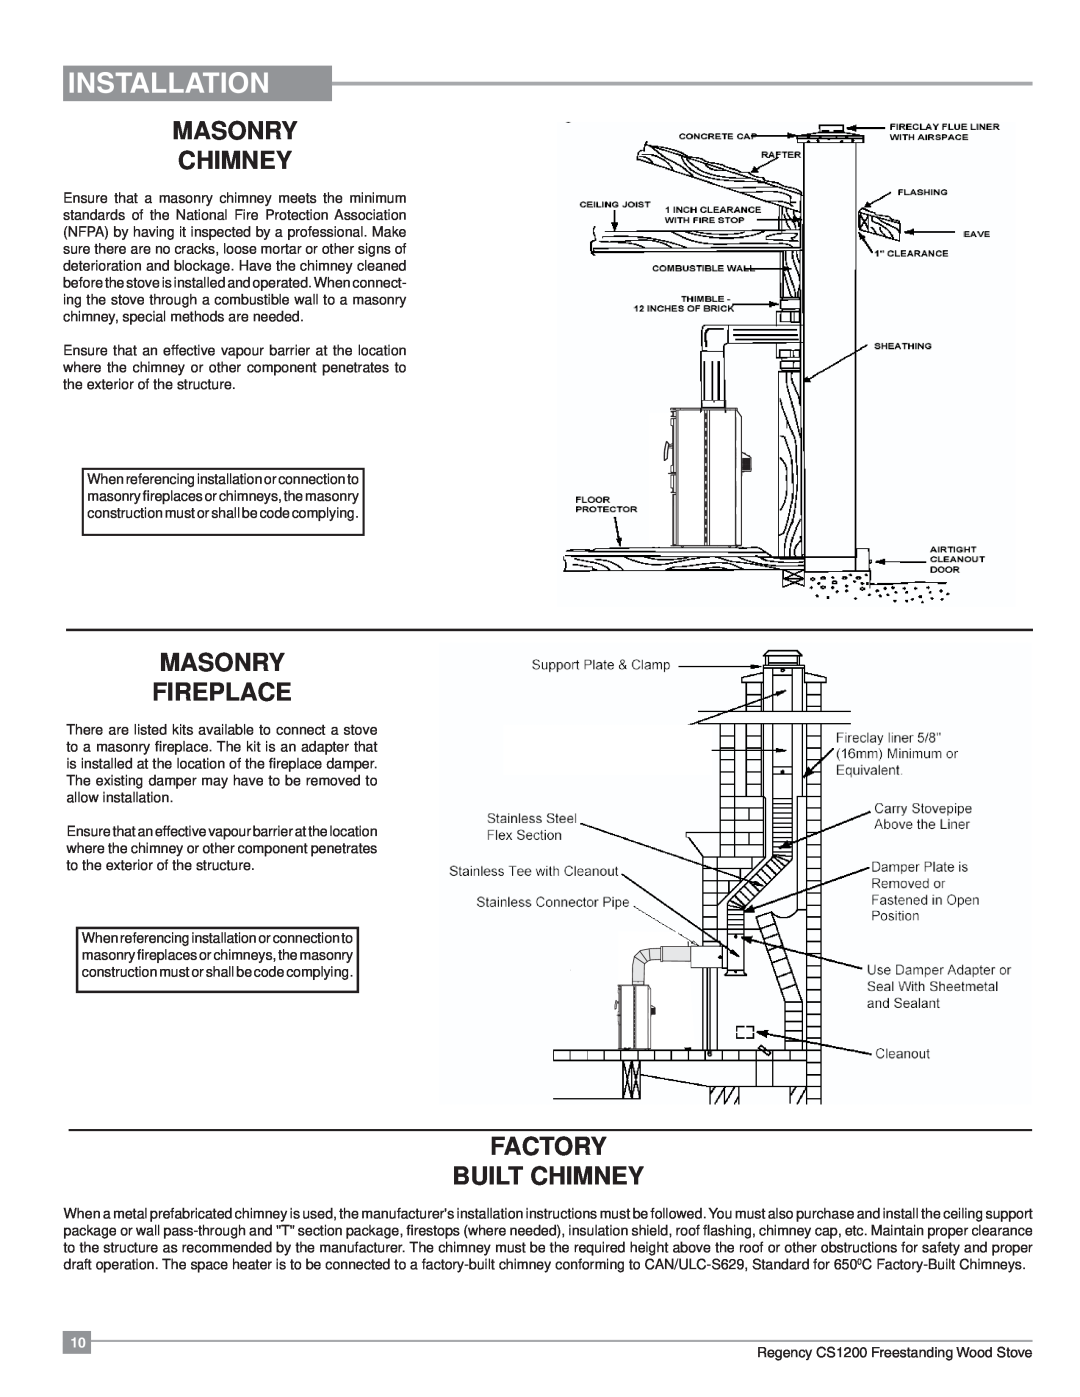 Regency CS1200 installation manual Installation, Masonry Chimney, Masonry Fireplace, Factory Built Chimney 